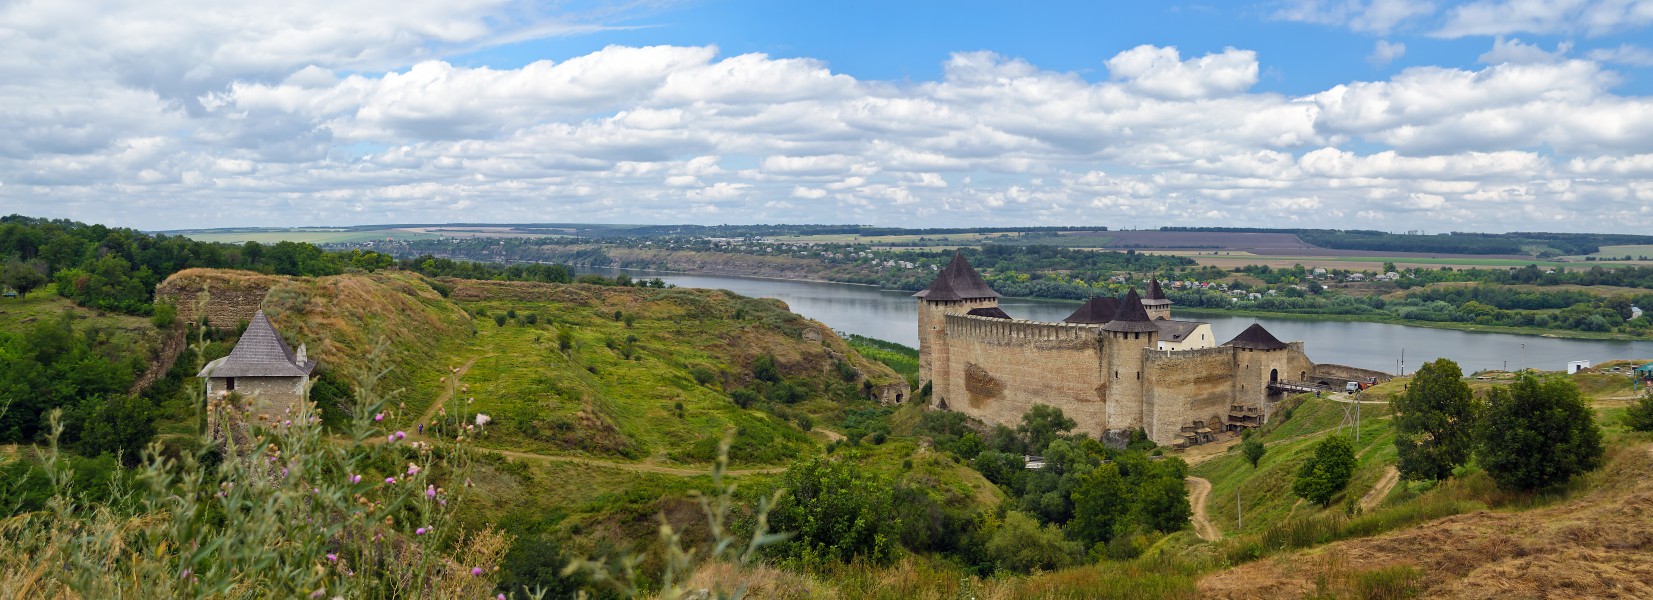 Хотинська фортеця - панорама